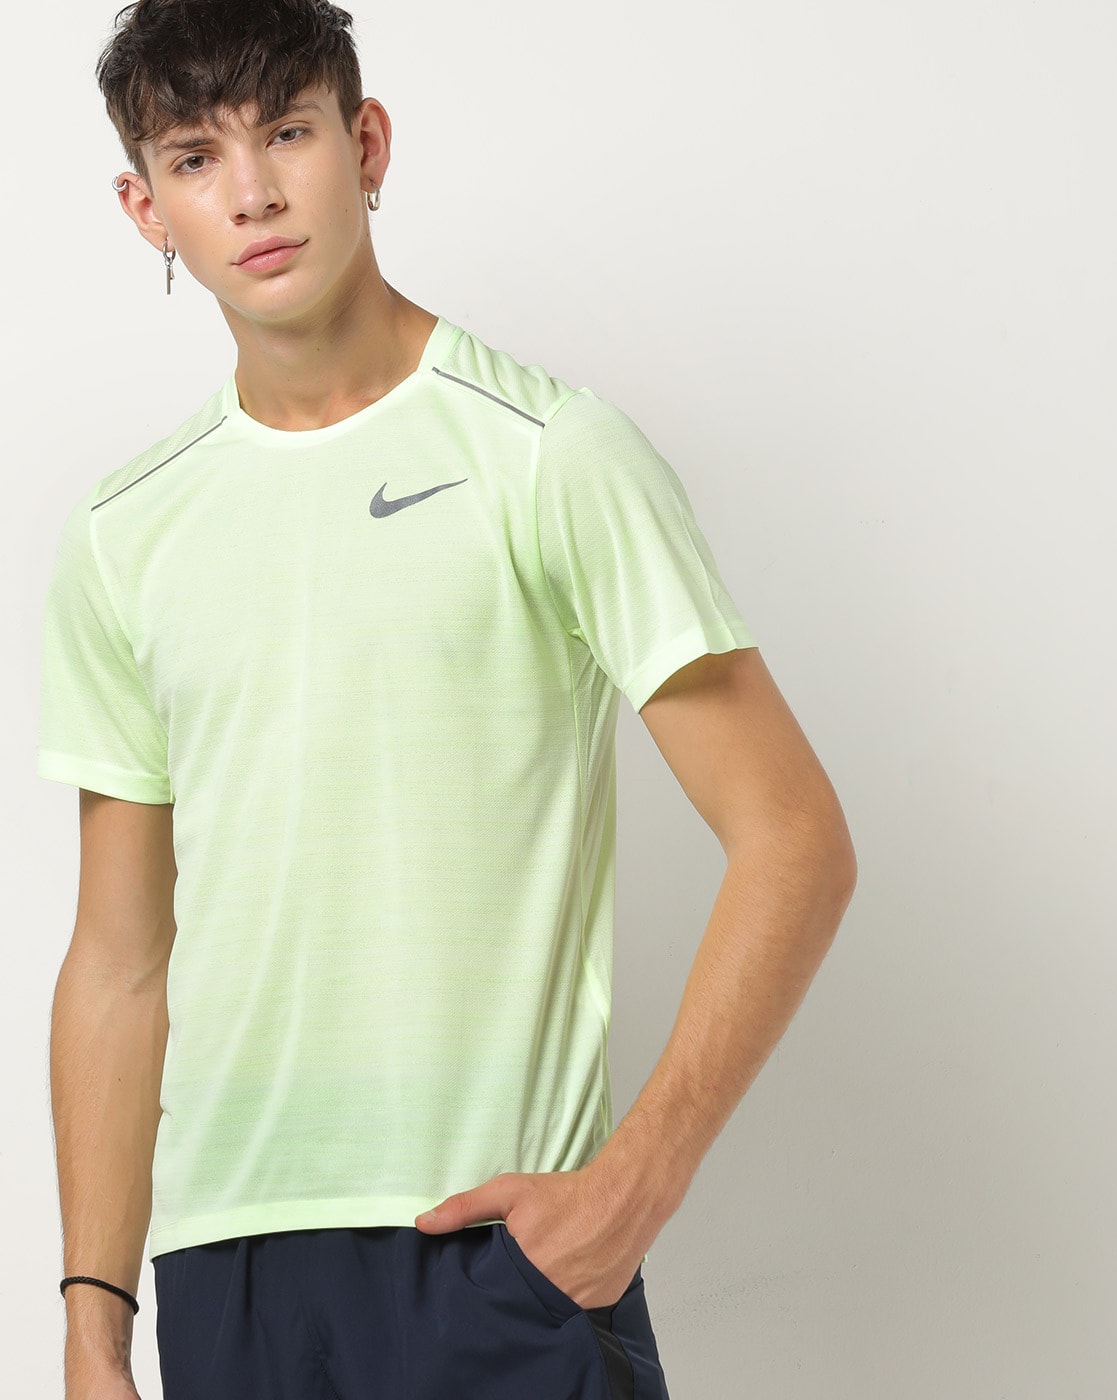 Buy > mens lime green nike shirt > in stock